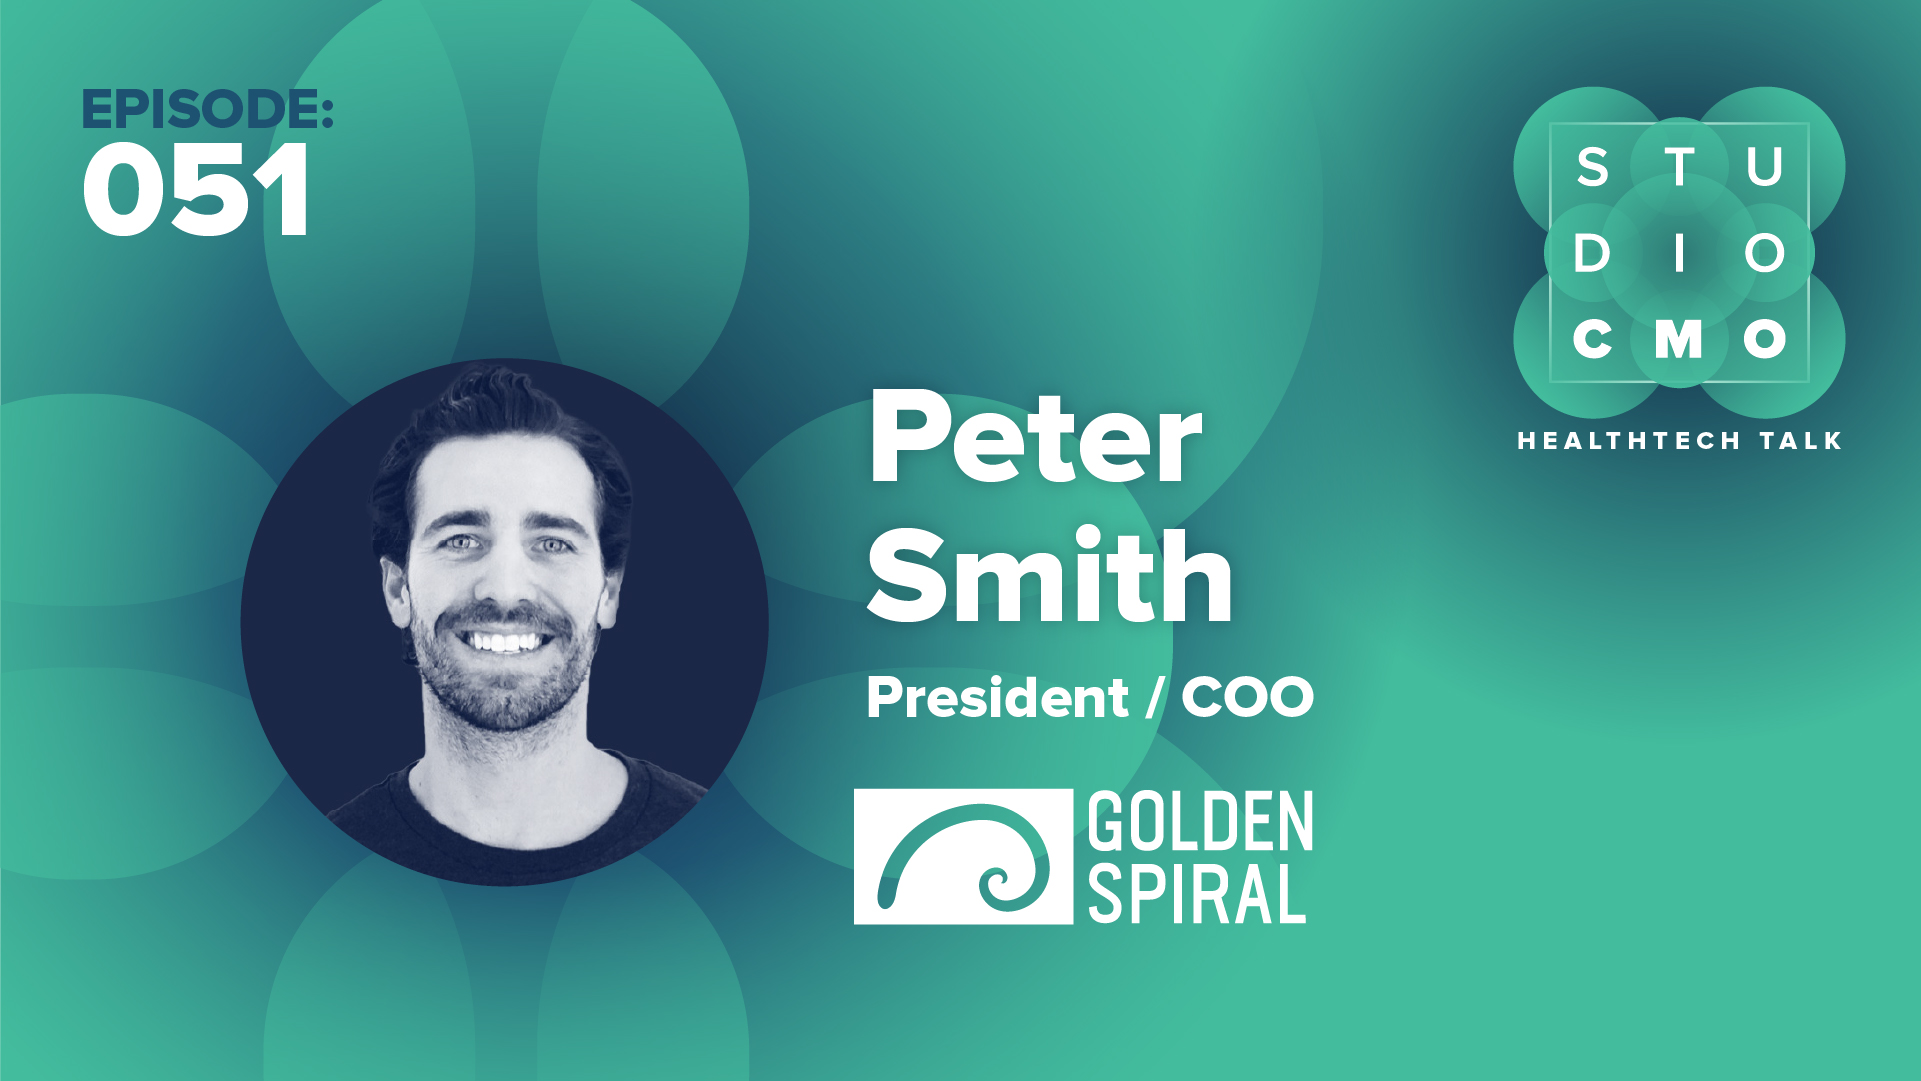 Studio CMO Episode 051 Peter Smith Golden Spiral KPIs